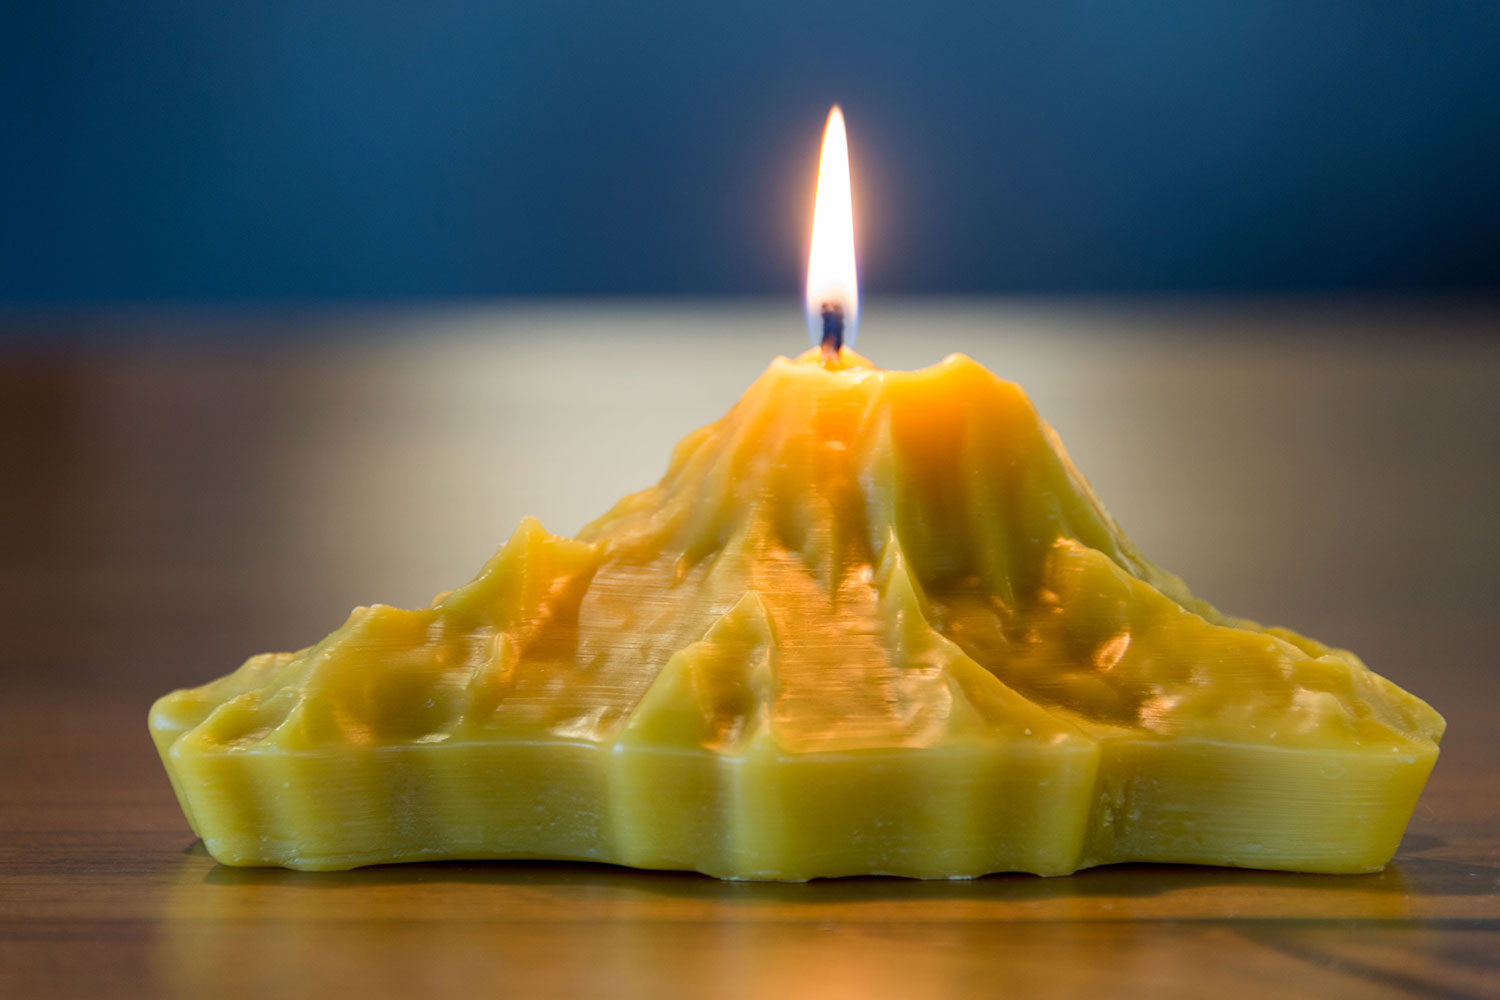 cascadia candle company kickstarter interview brad swift mountain candles rainiercu